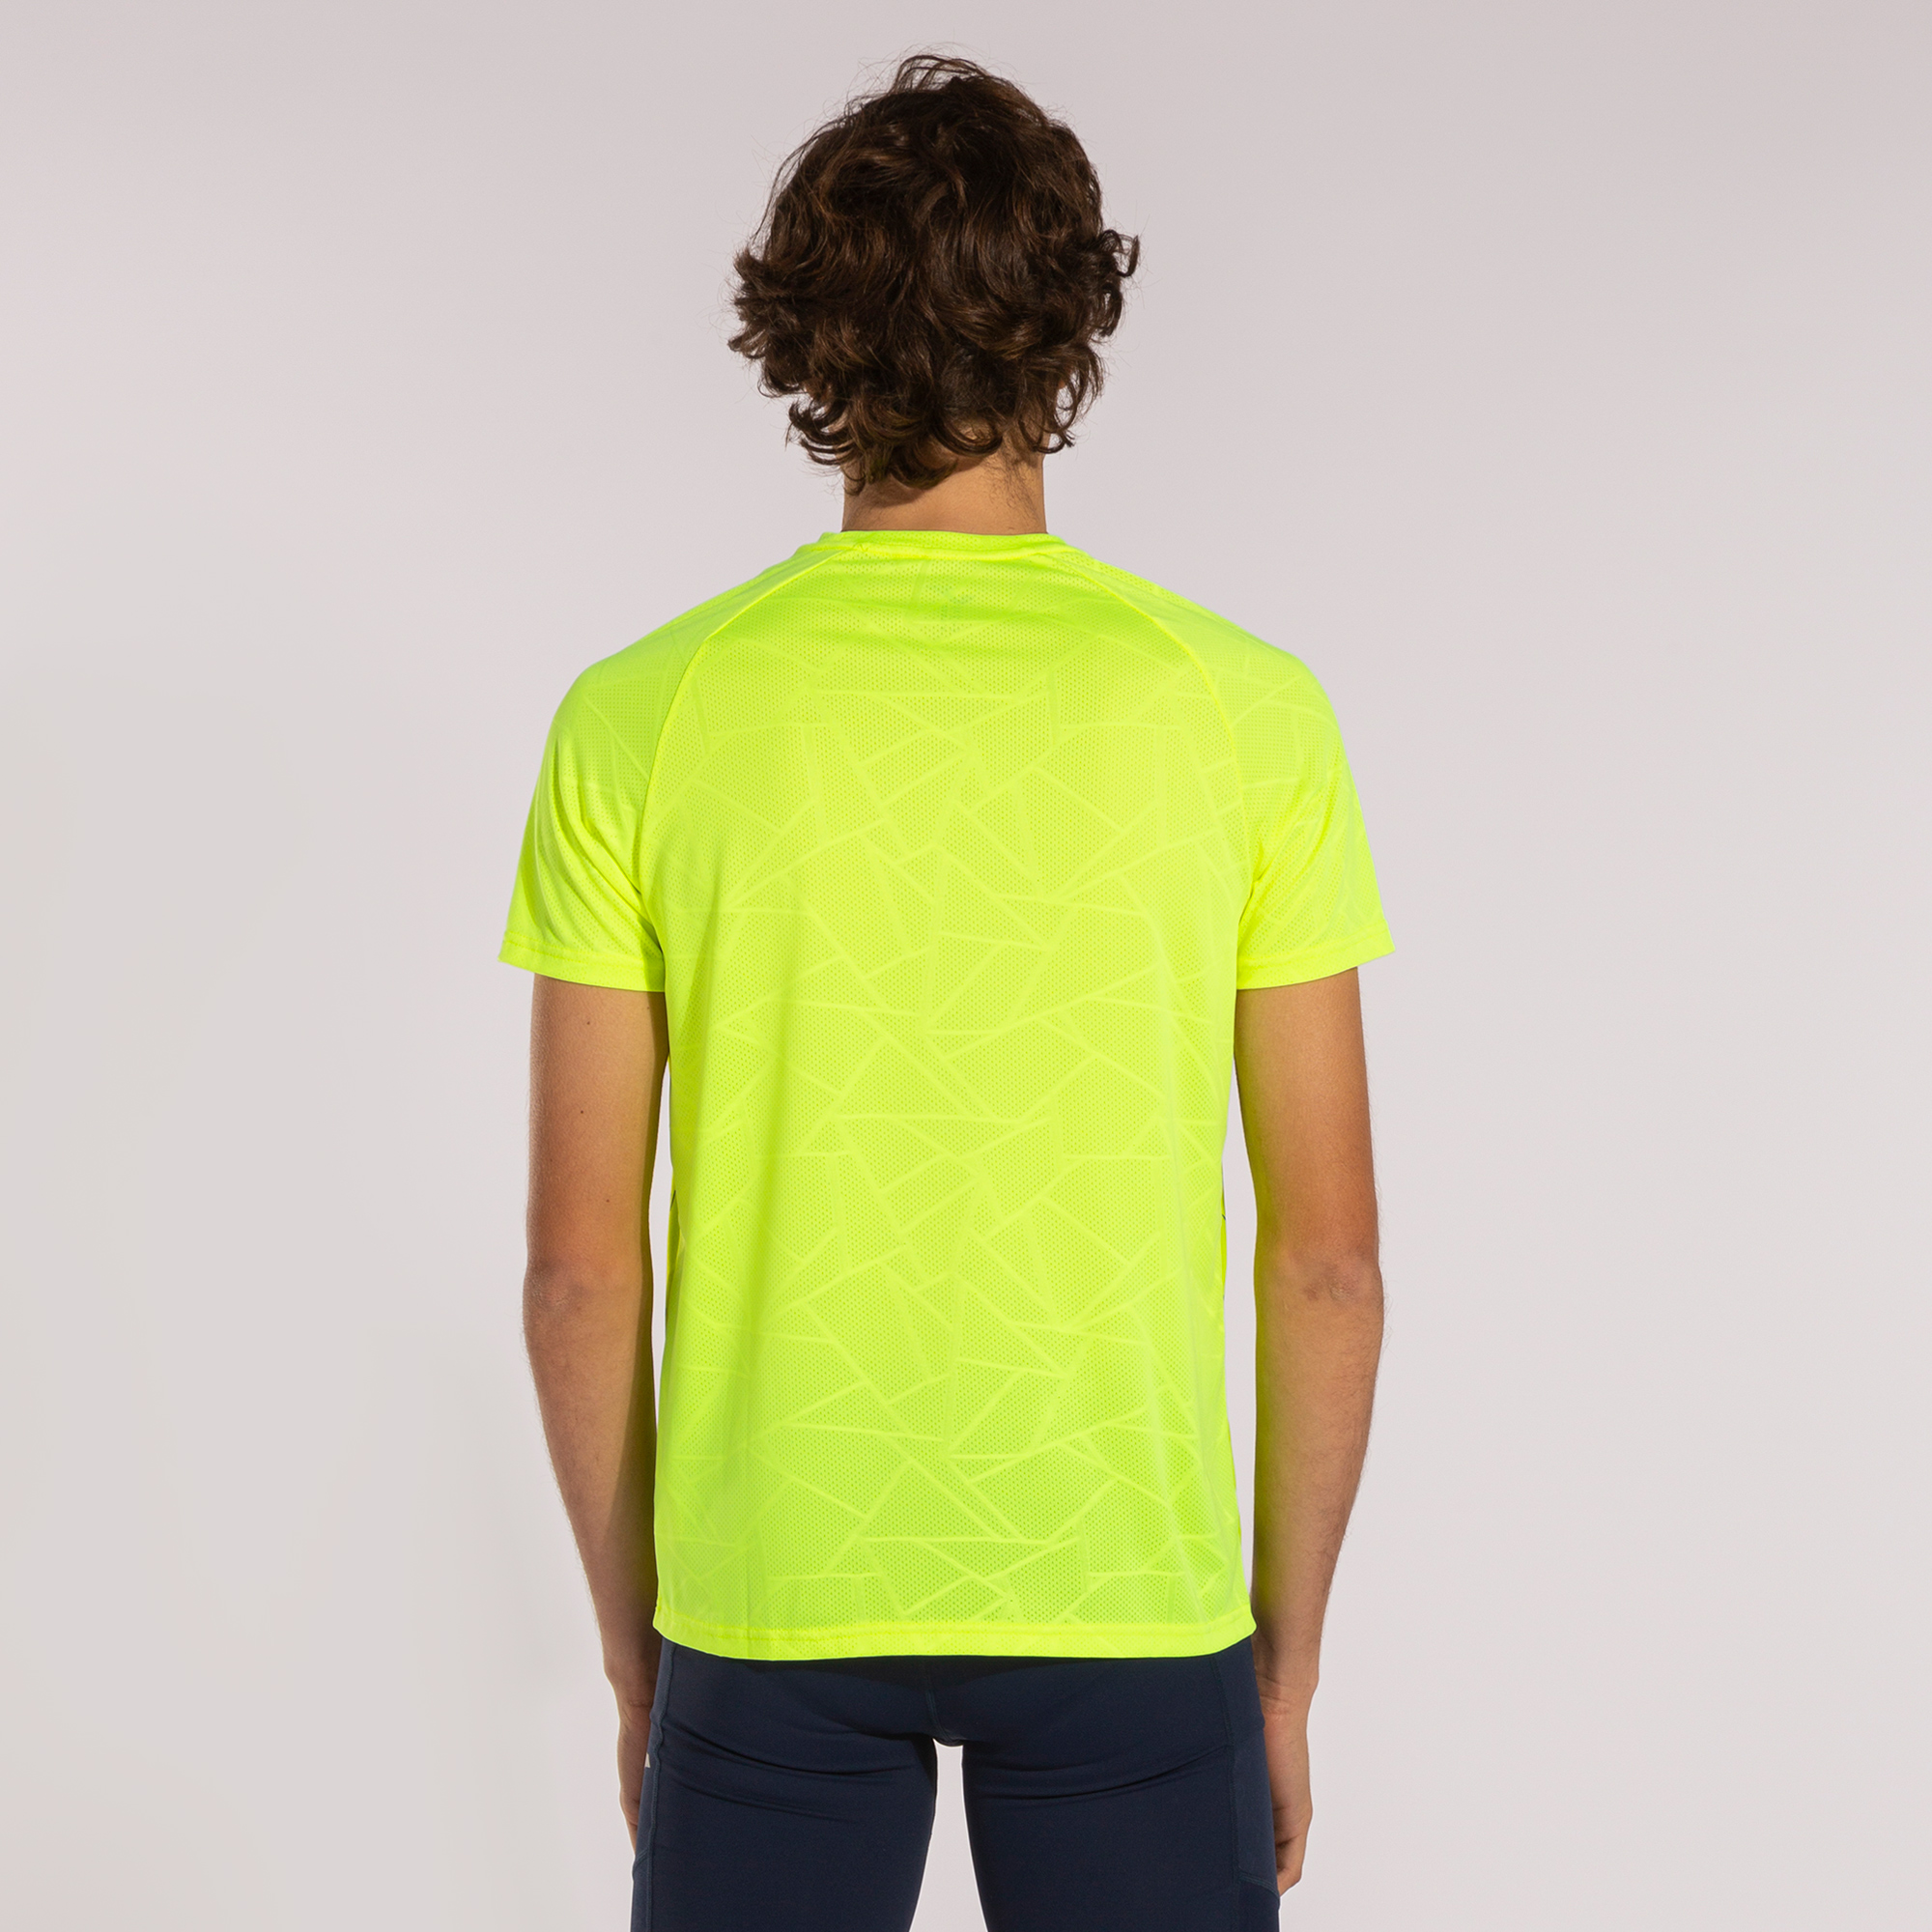 T-shirt Elite Xi Amarelo Fluorescente Joma